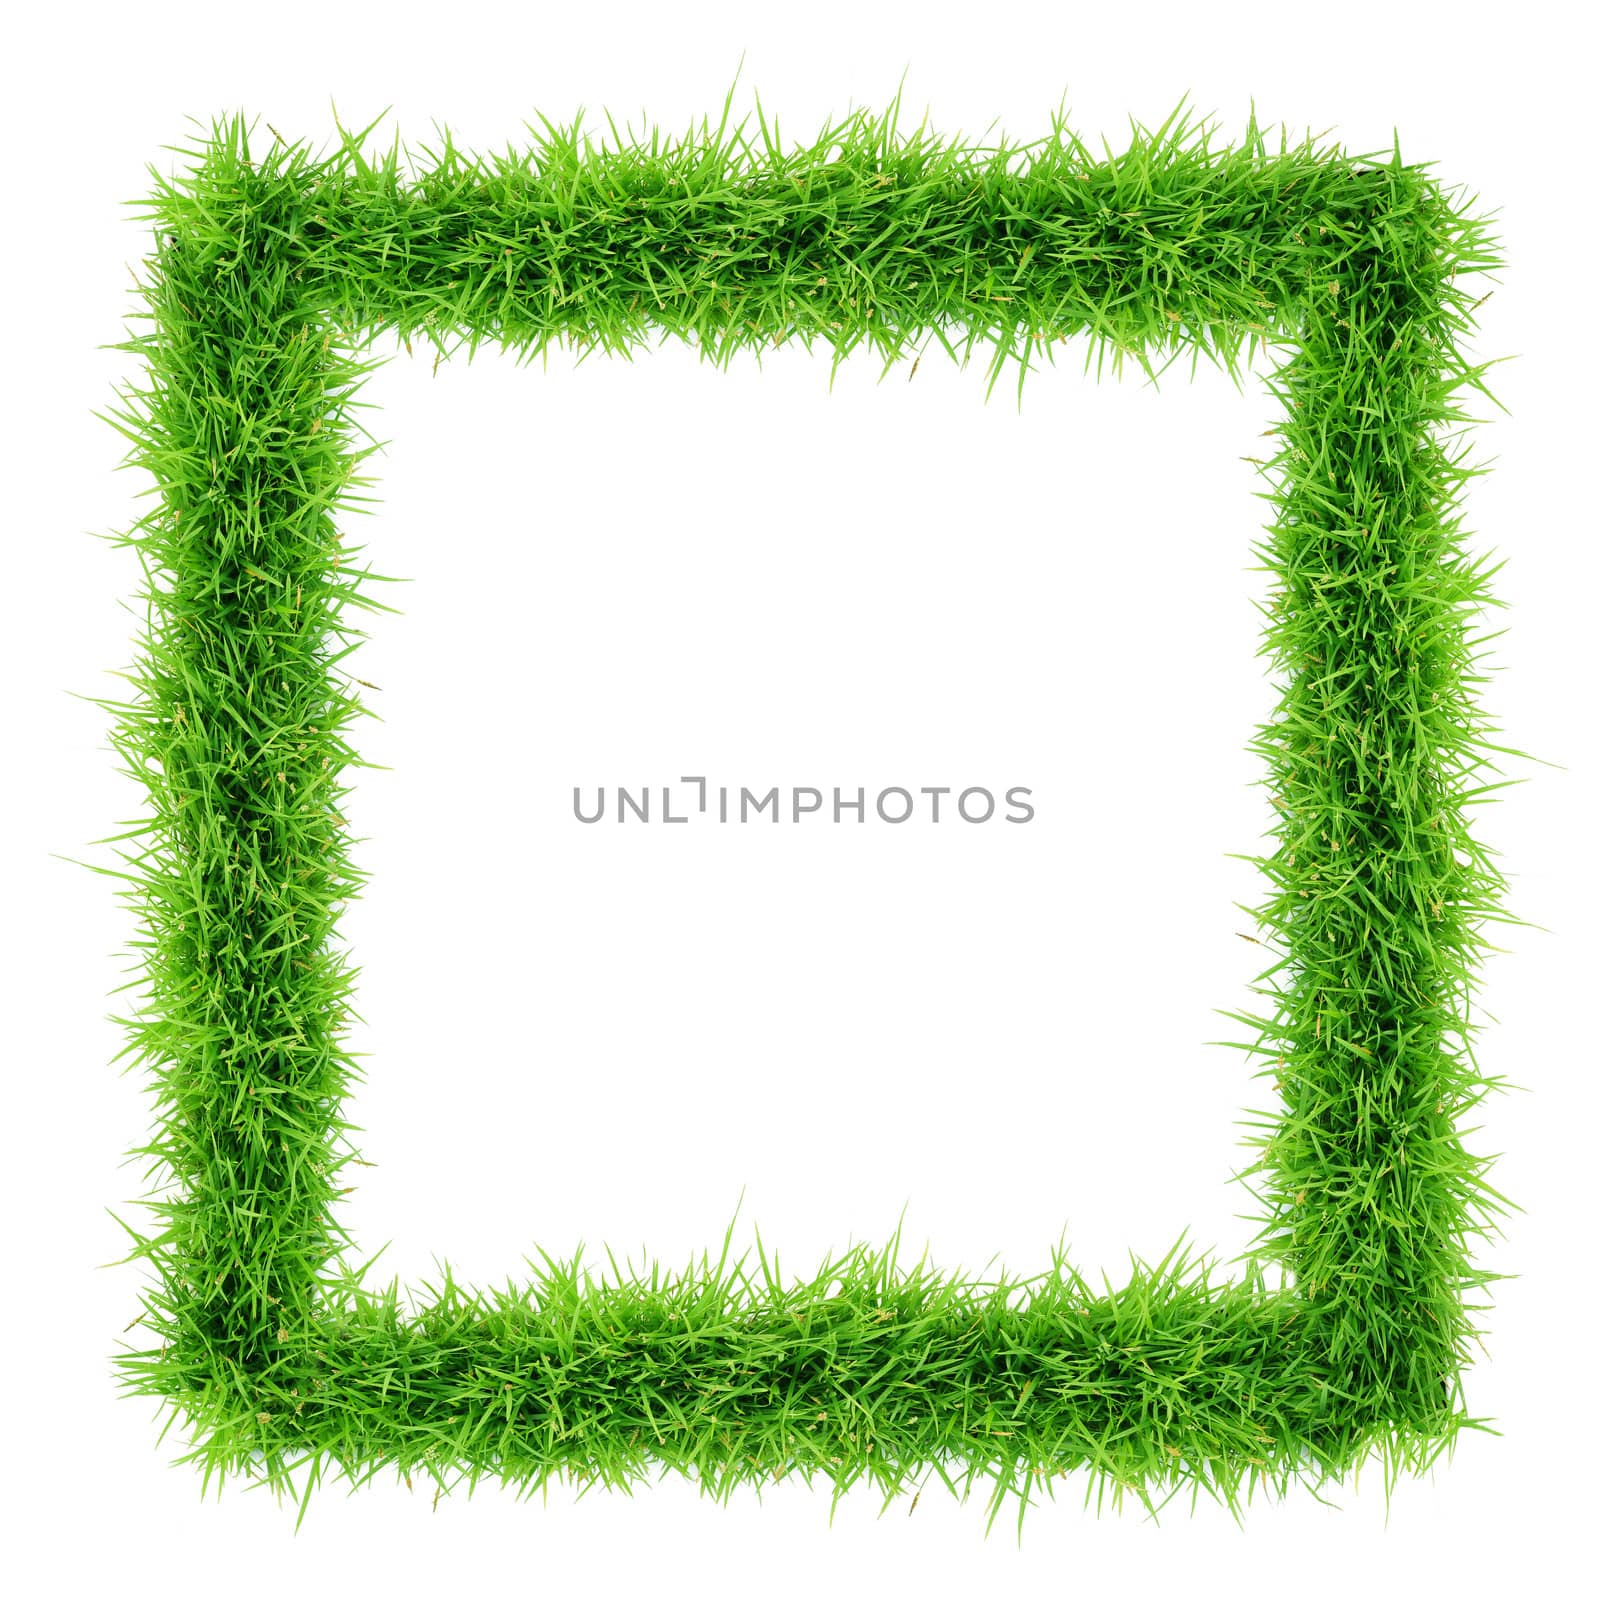 grass frame by antpkr